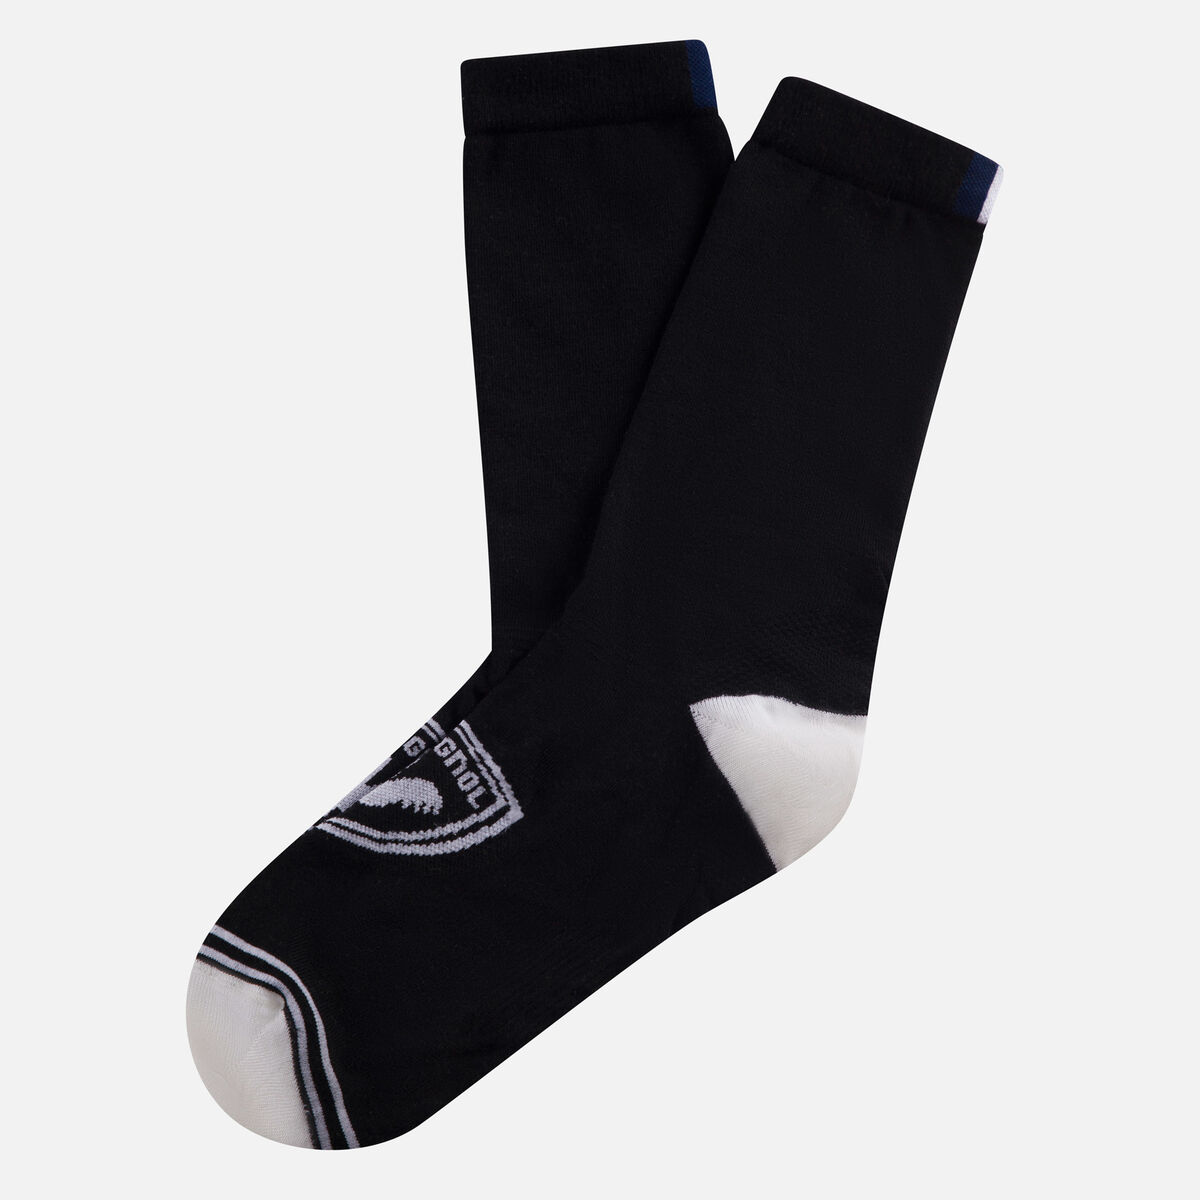 Rossignol Men's lifestyle socks Black